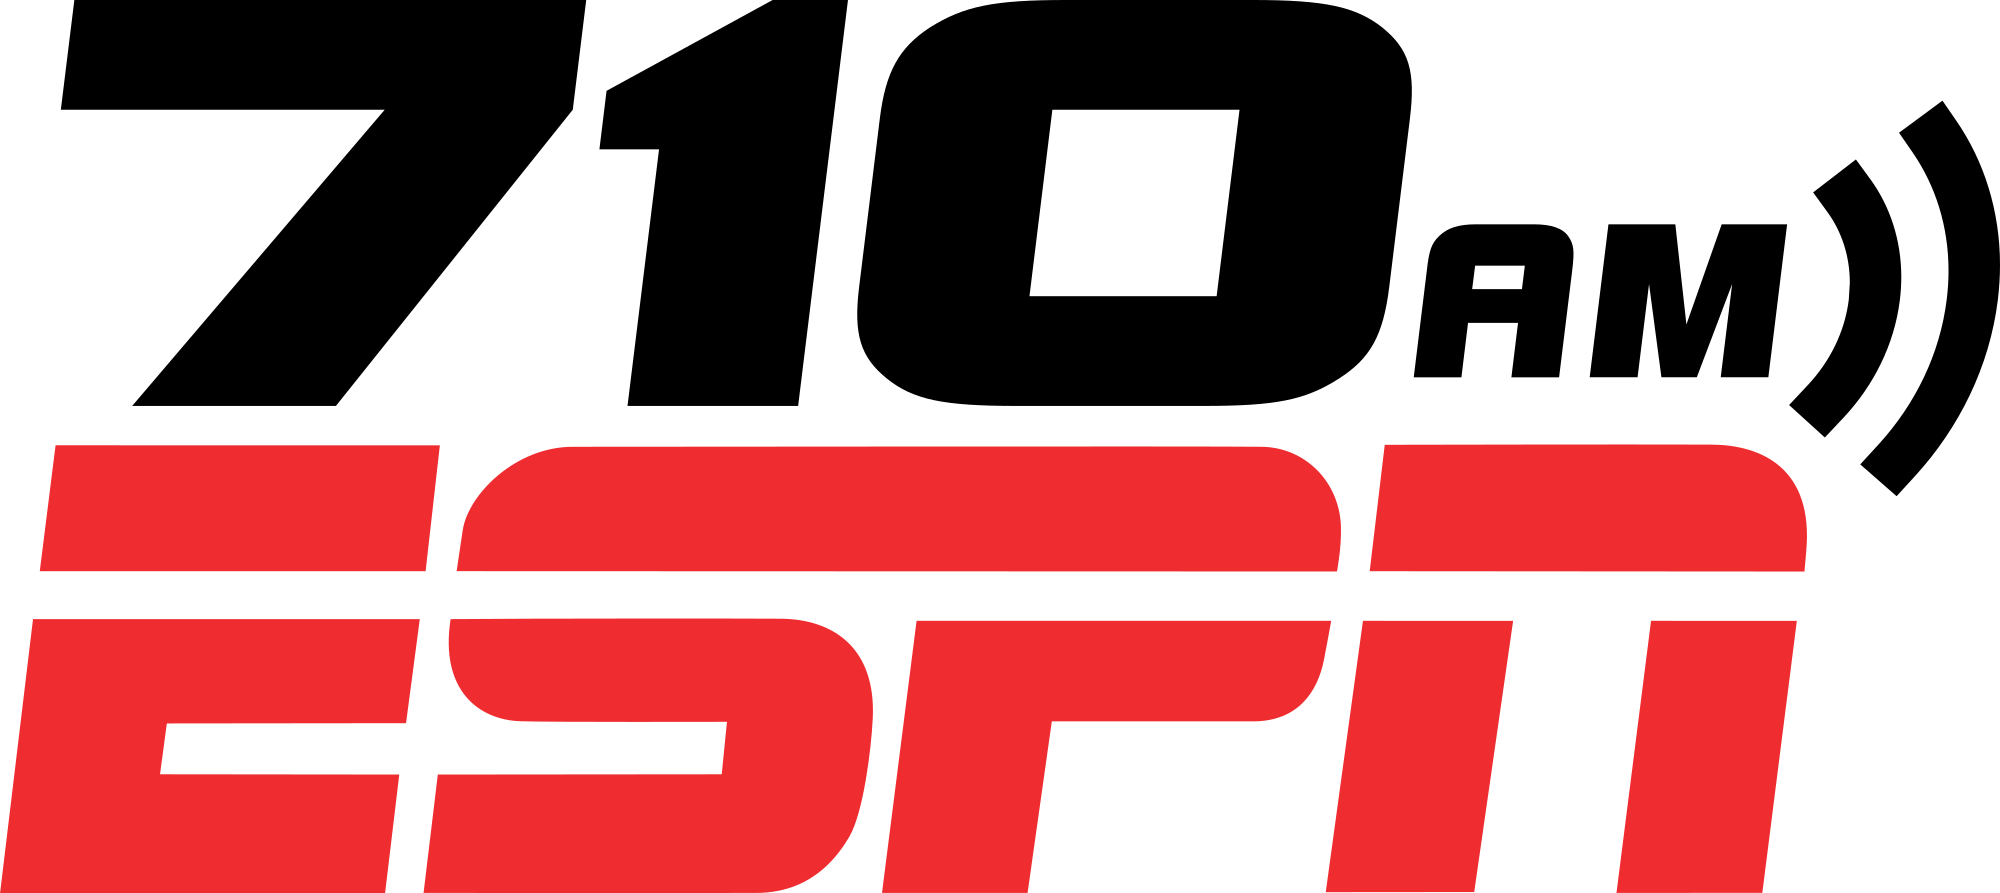 KSPN 710 AM ESPN logo.svg